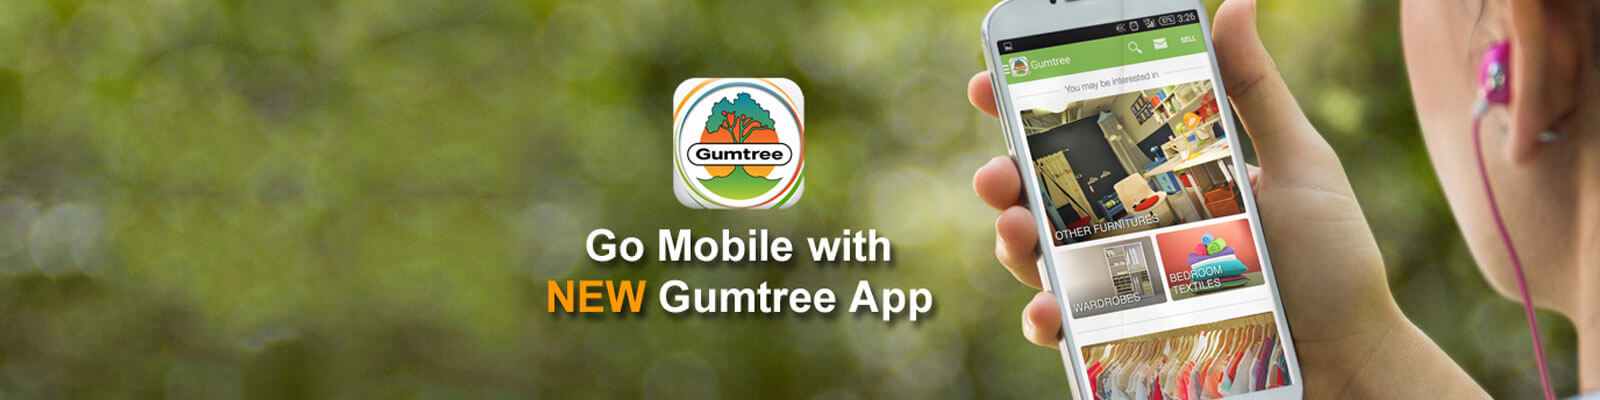 app like gumtree